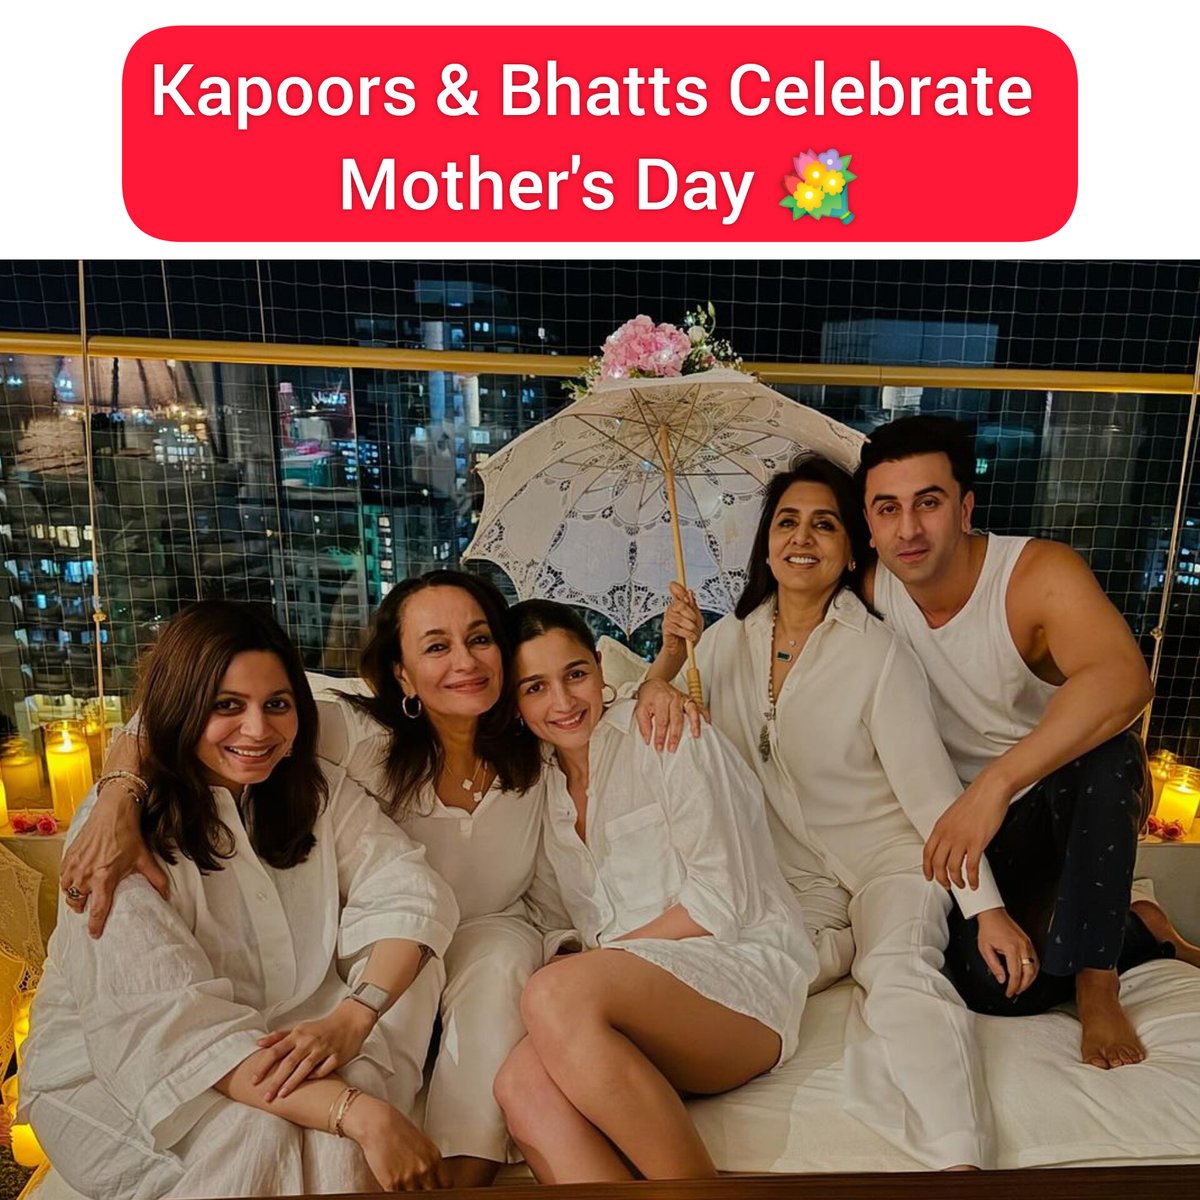 Happy Mother's Day from Kapoors and Bhatts 😍

#AliaBhatt #RanbirKapoor #NeetuKapoor #SoniRazdan #ShaheenBhatt #GlamourAlert